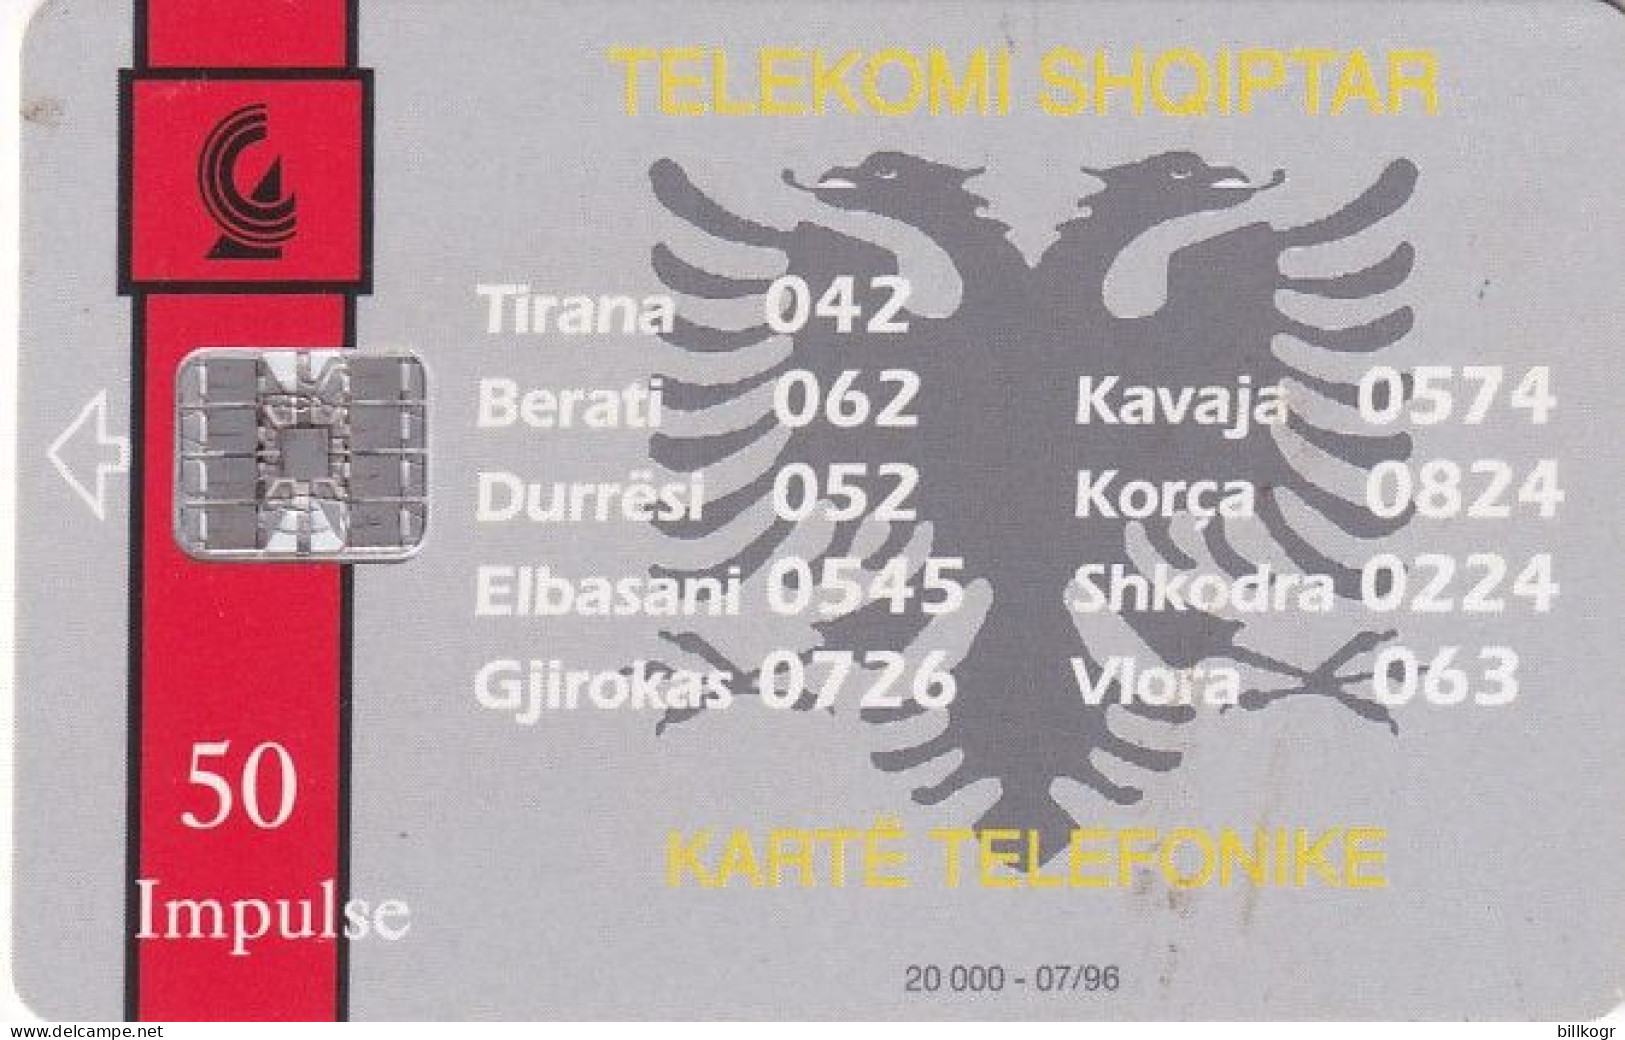 ALBANIA - Telecom Shqiptar 50 Units(reverse INSIG), Tirage 20000, 07/96, Used - Albania